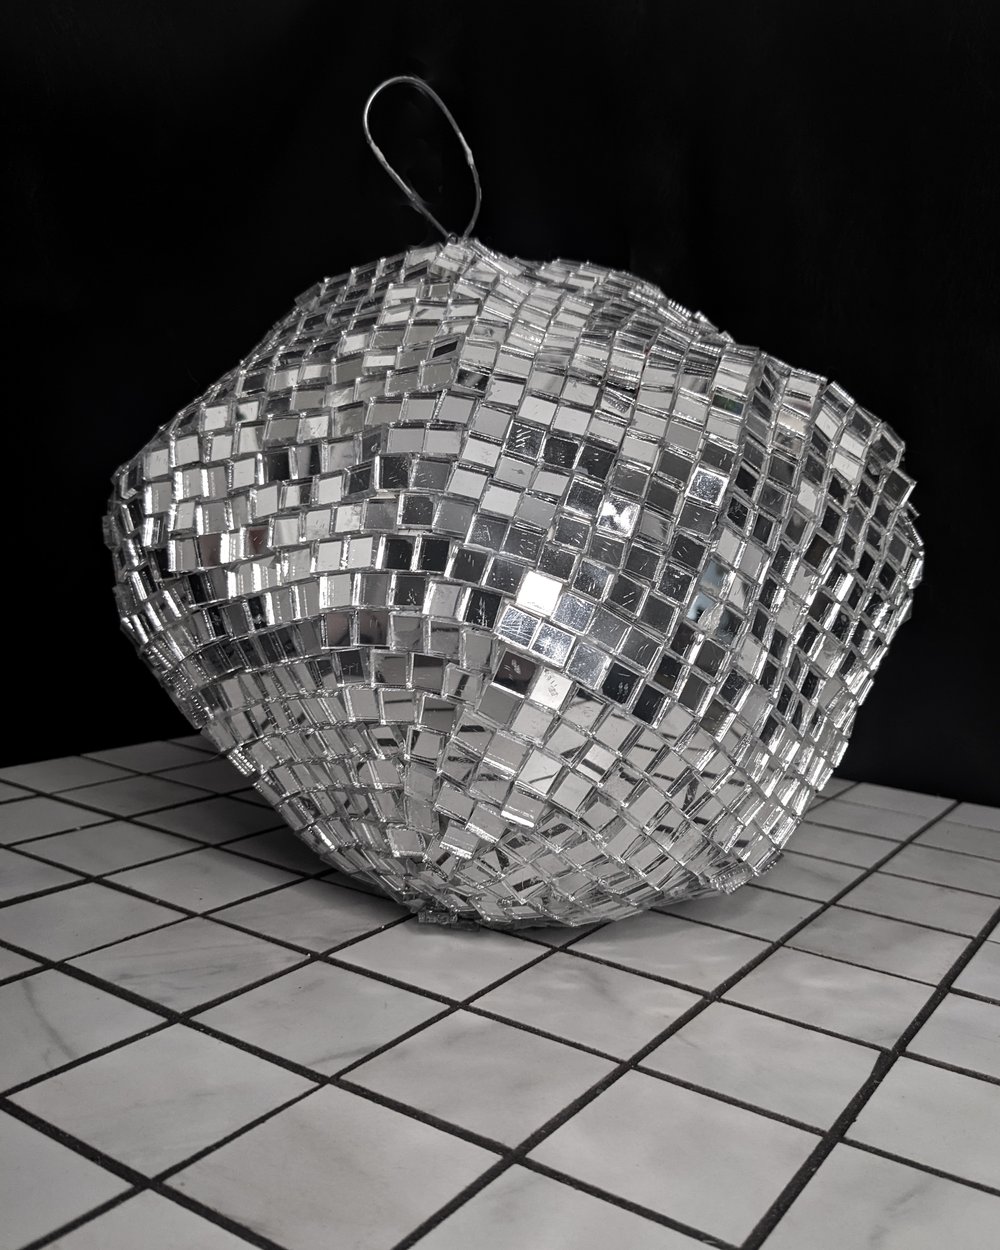 Disco Ball Acrylic Tray – The Heirloom Shop TN